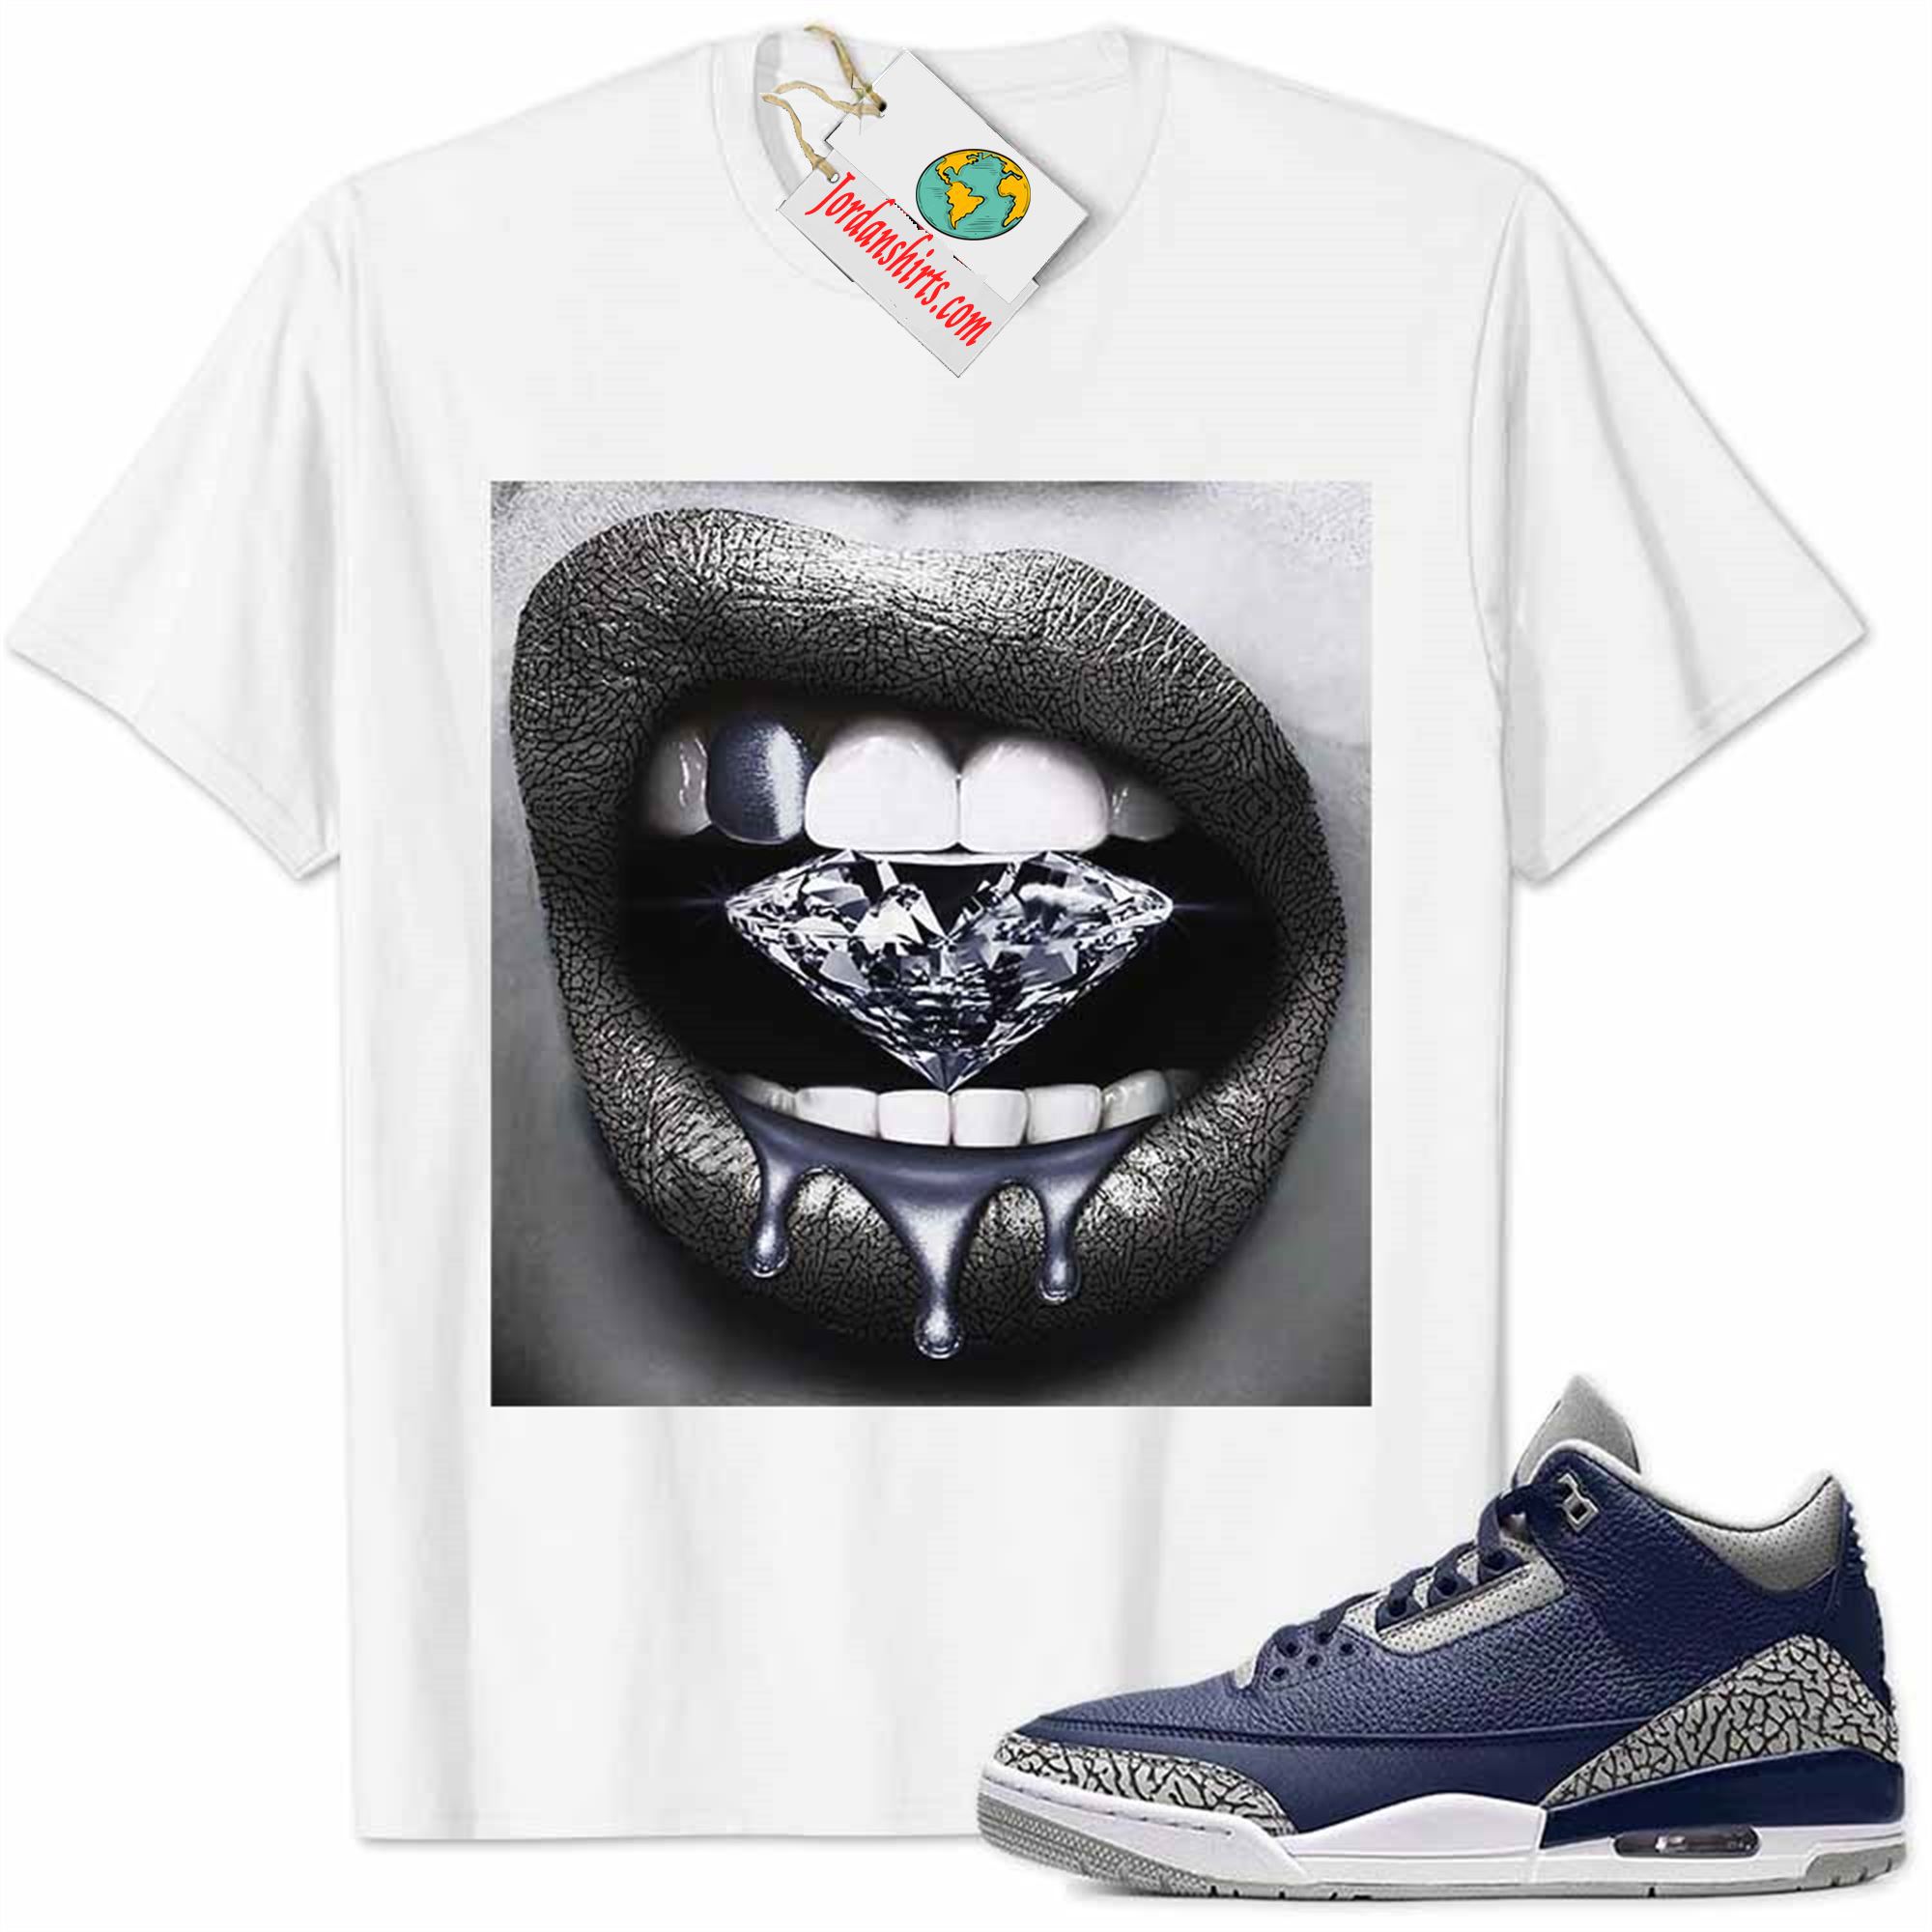 Jordan 3 Shirt, Jordan 3 Georgetown Midnight Navy Shirt Sexy Lip Bite Diamond Dripping White Size Up To 5xl